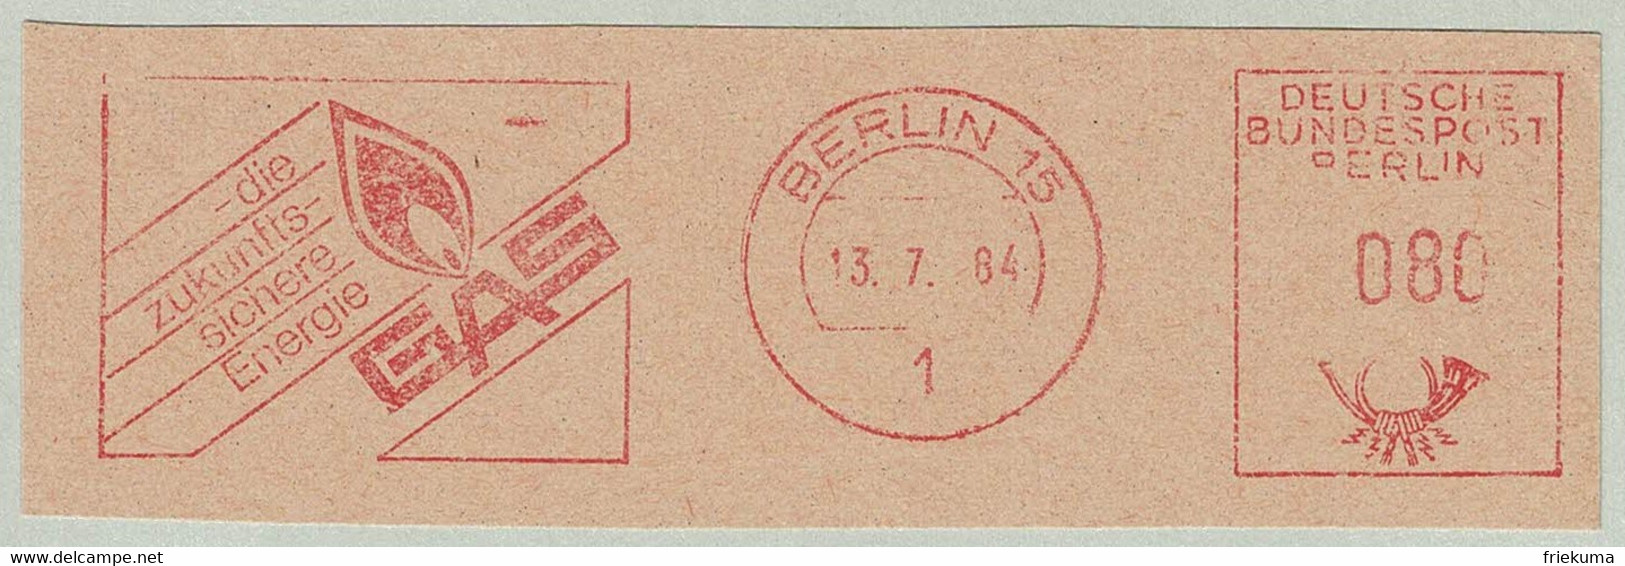 Deutsche Bundespost 1984, Freistempel / EMA / Meterstamp Gas / Gaz Berlin, Energie / Energy - Gaz